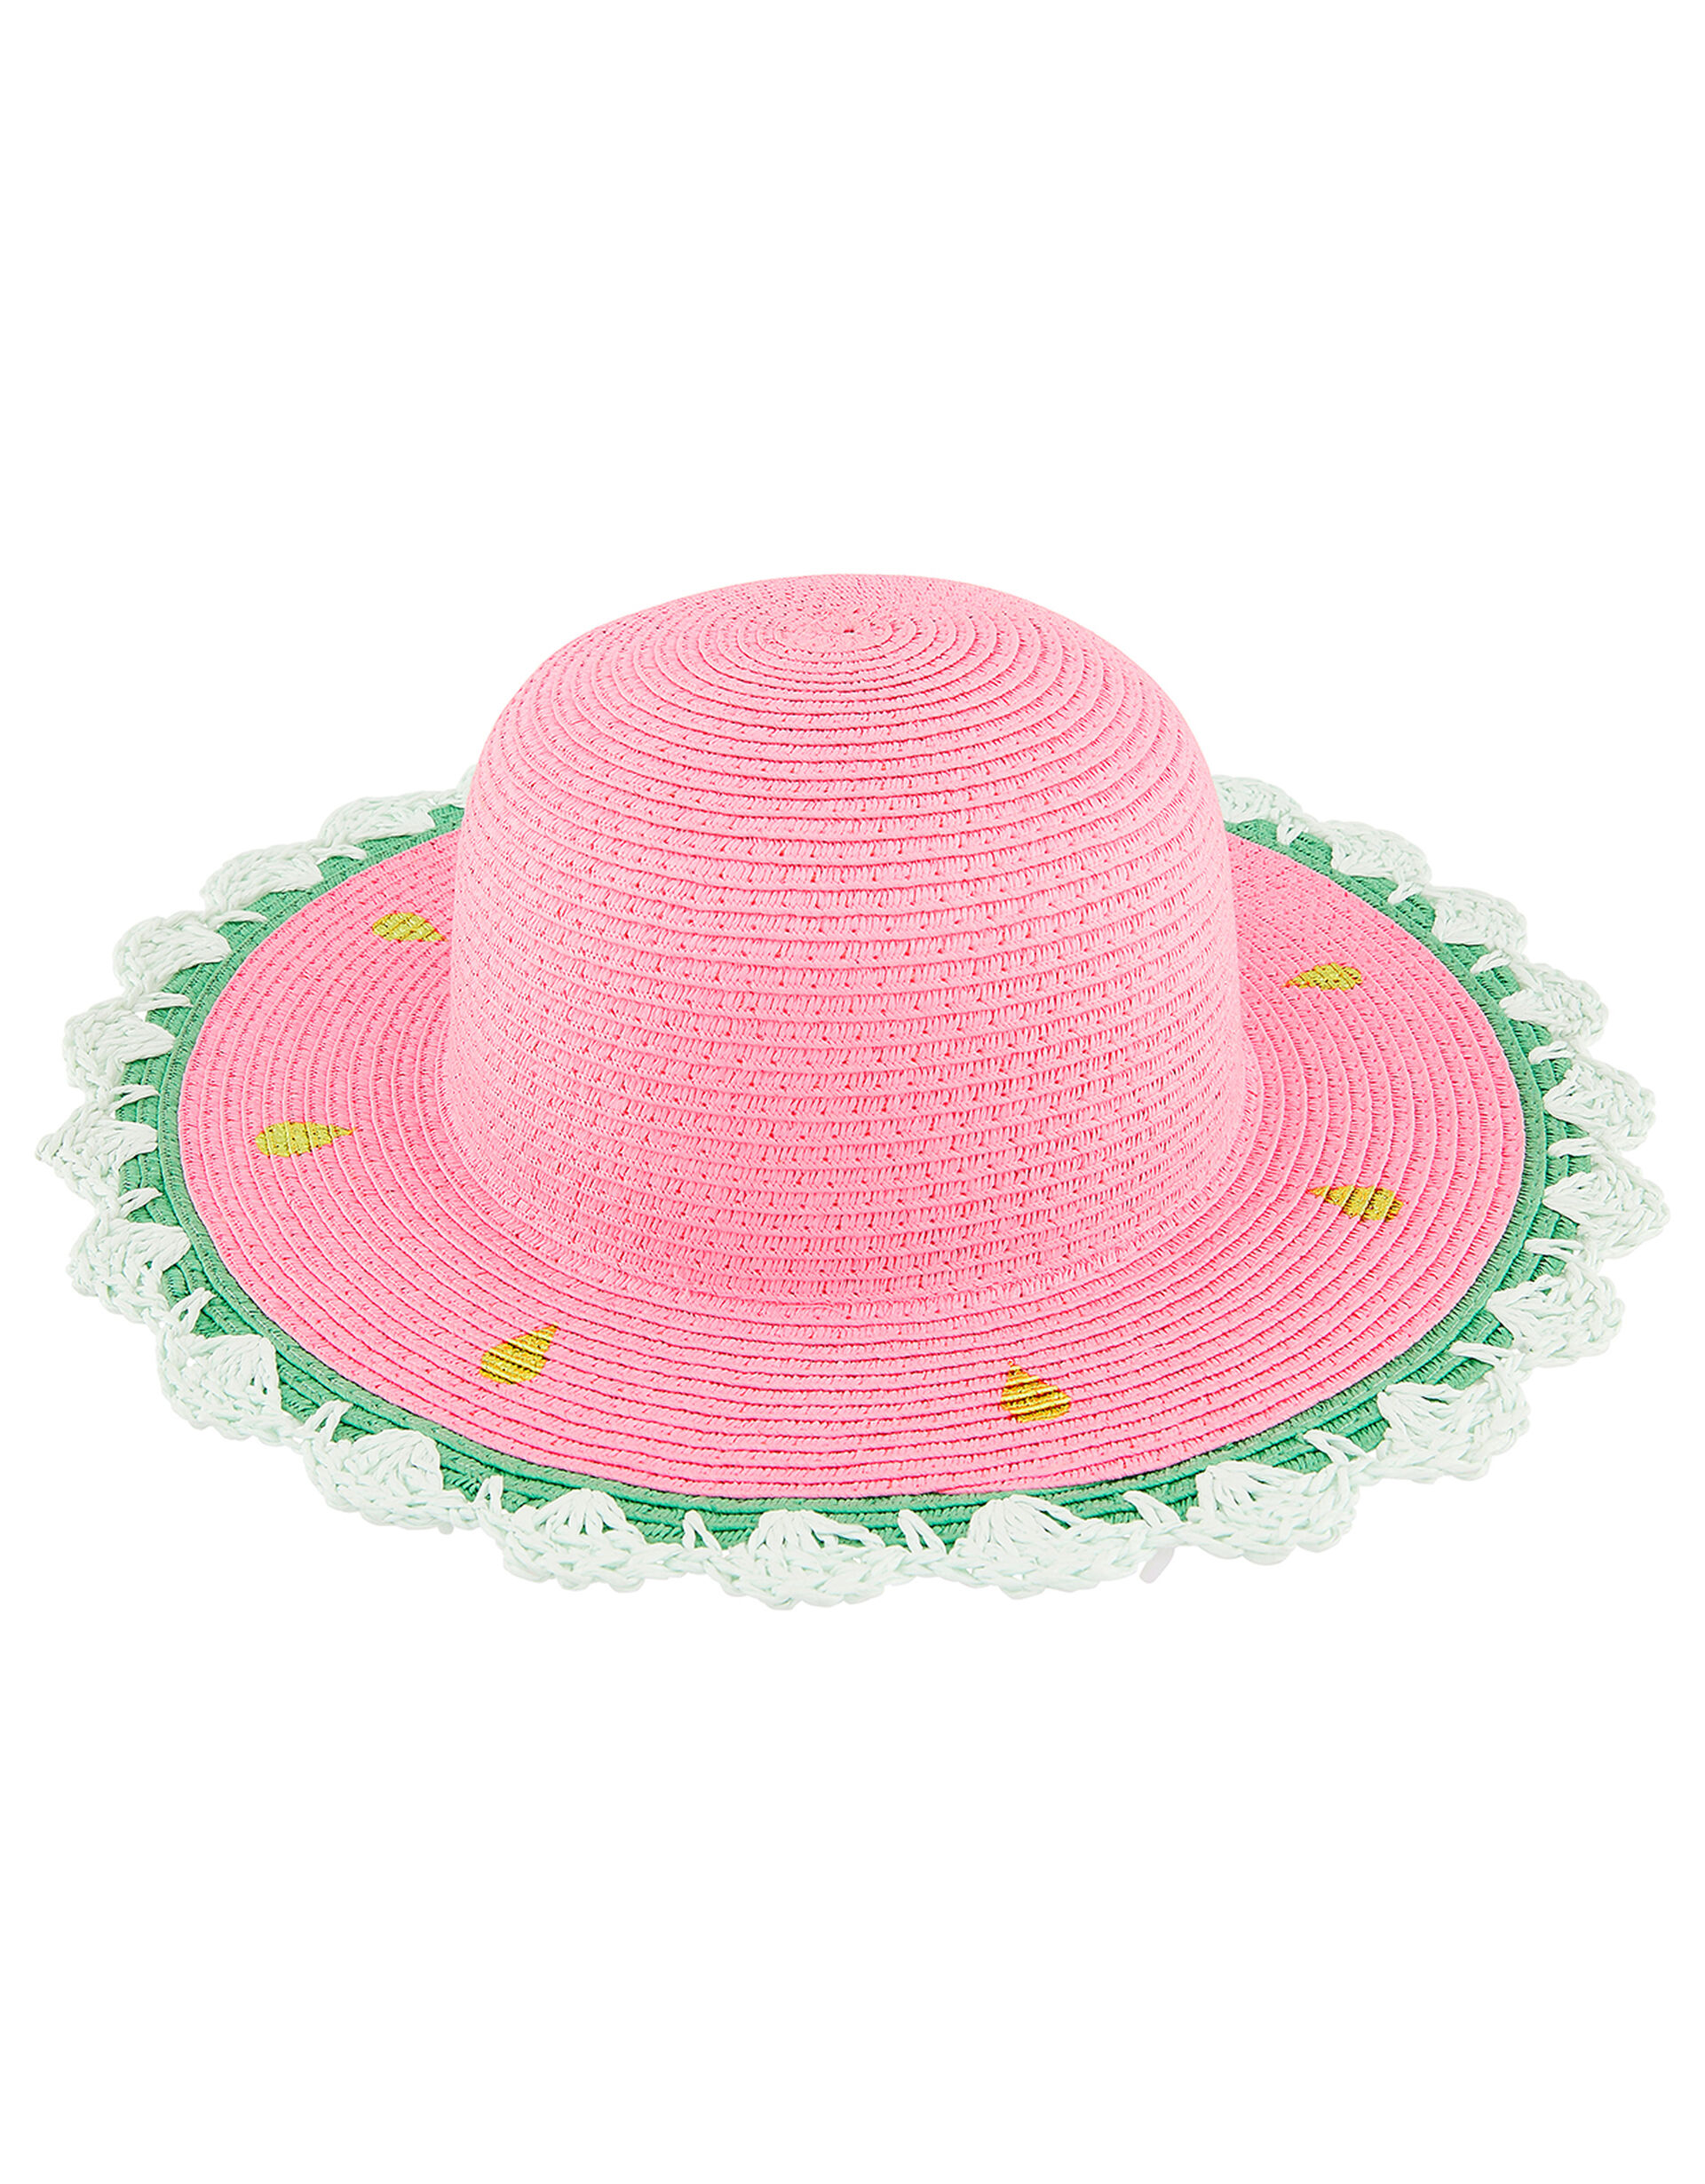 Jess Watermelon Floppy Hat, Multi (MULTI), large